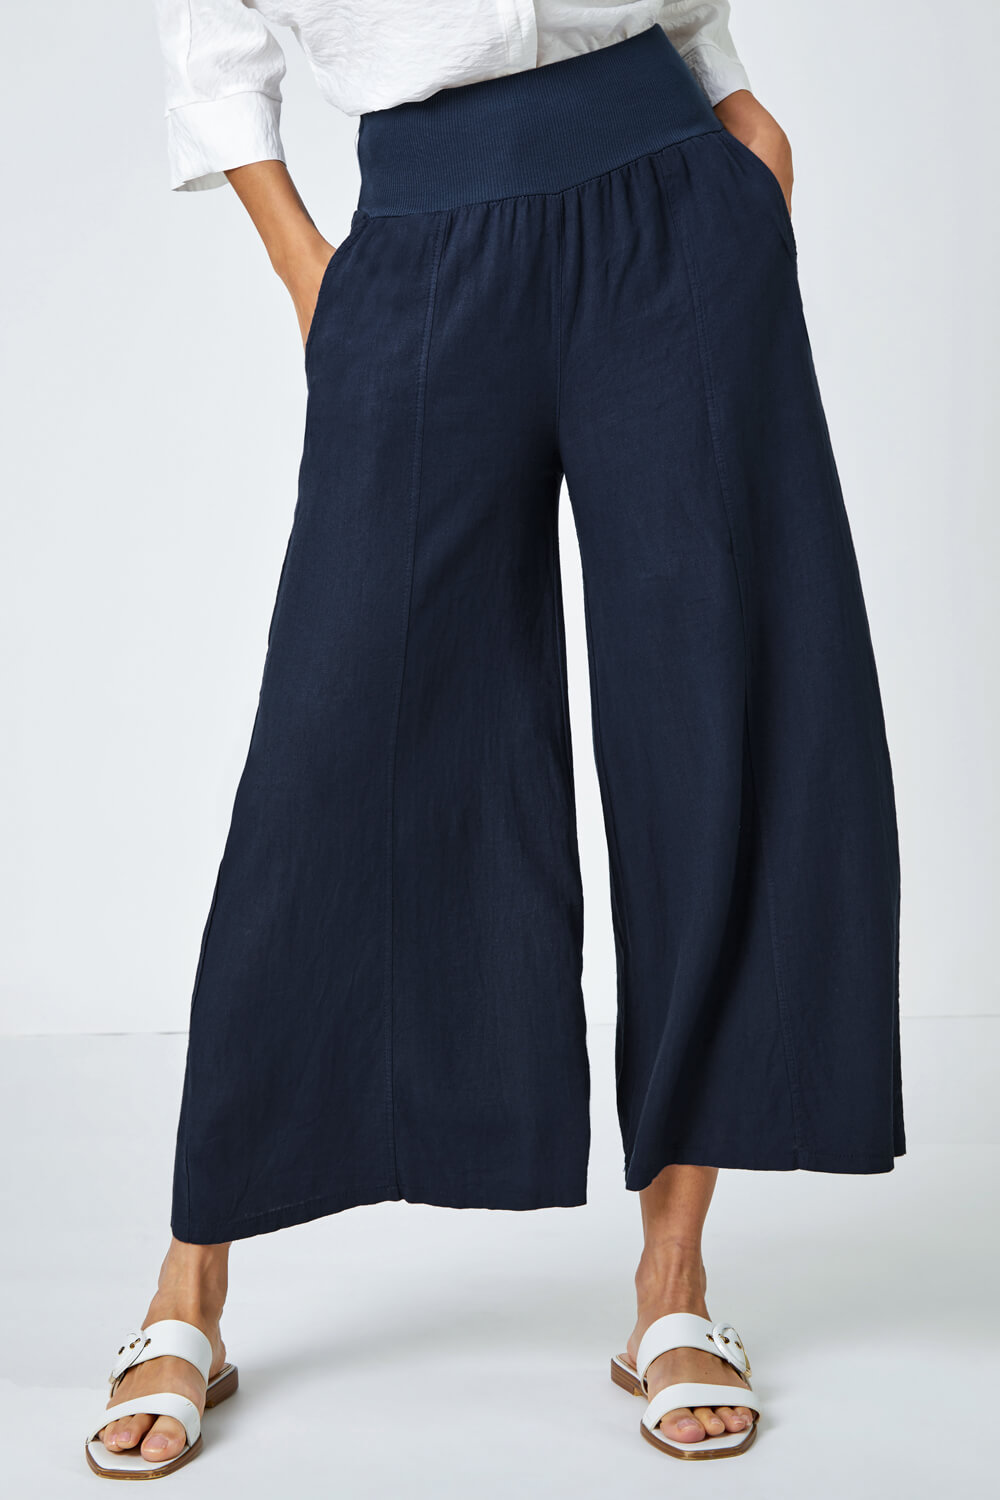 Linen Trousers, Linen Women Capri Pants, Linen Culottes With Pockets and  Elastic Waist. -  UK